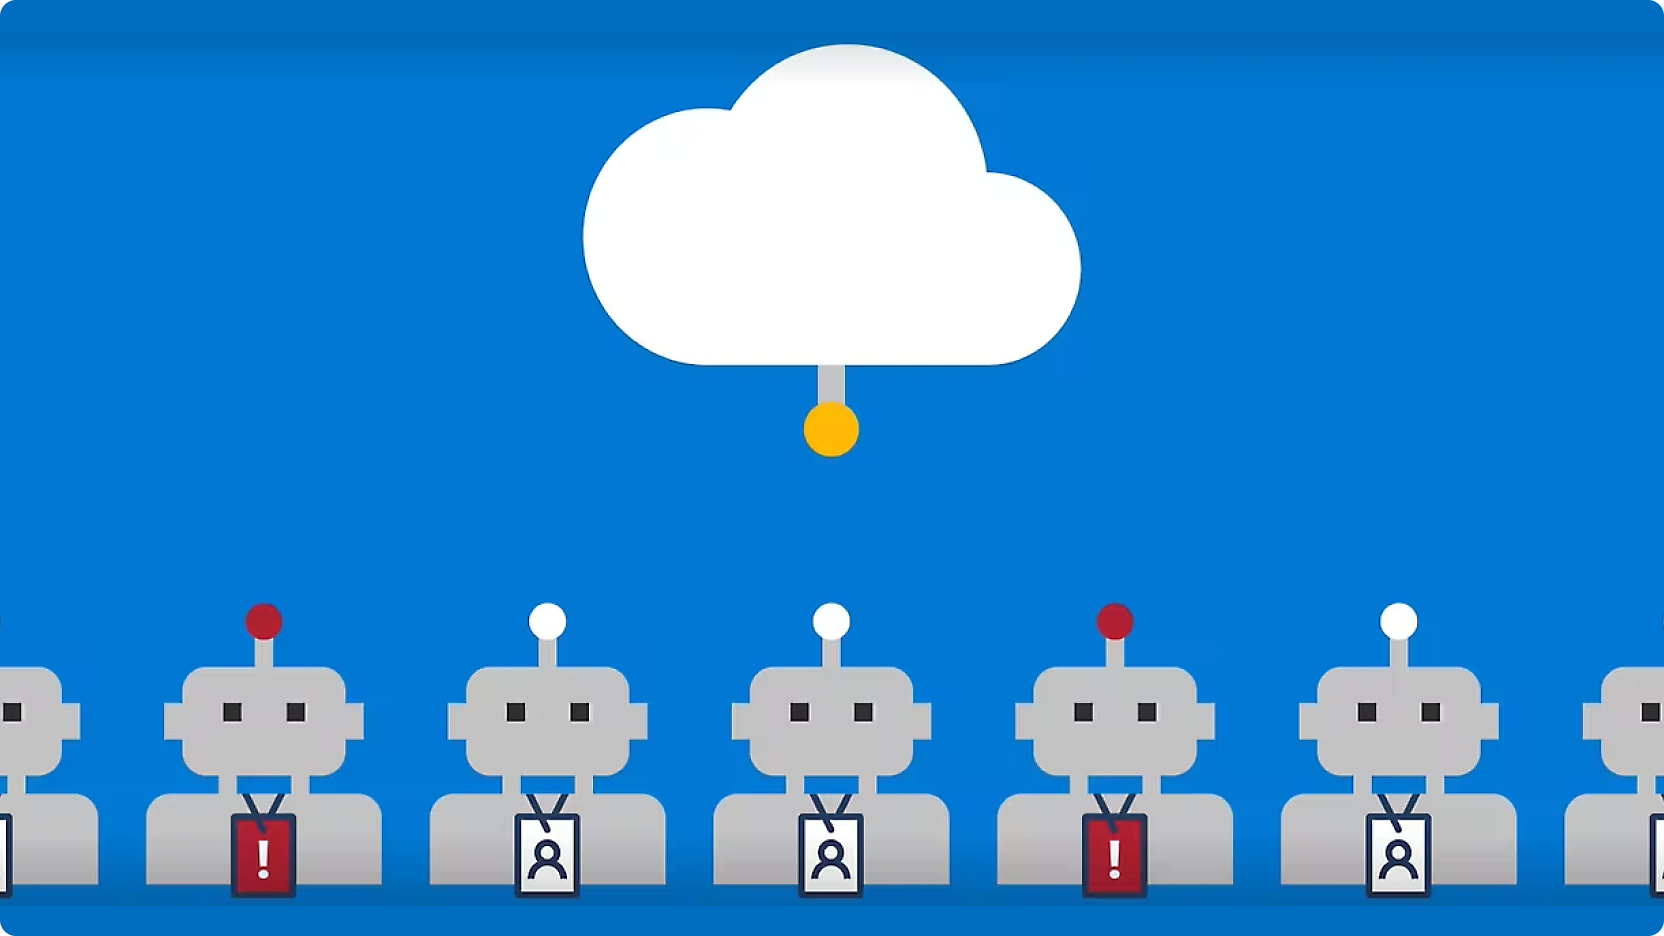 Grafik menggambarkan barisan robot dengan tombol merah di kepala, terhubung oleh garis-garis ke awan pusat